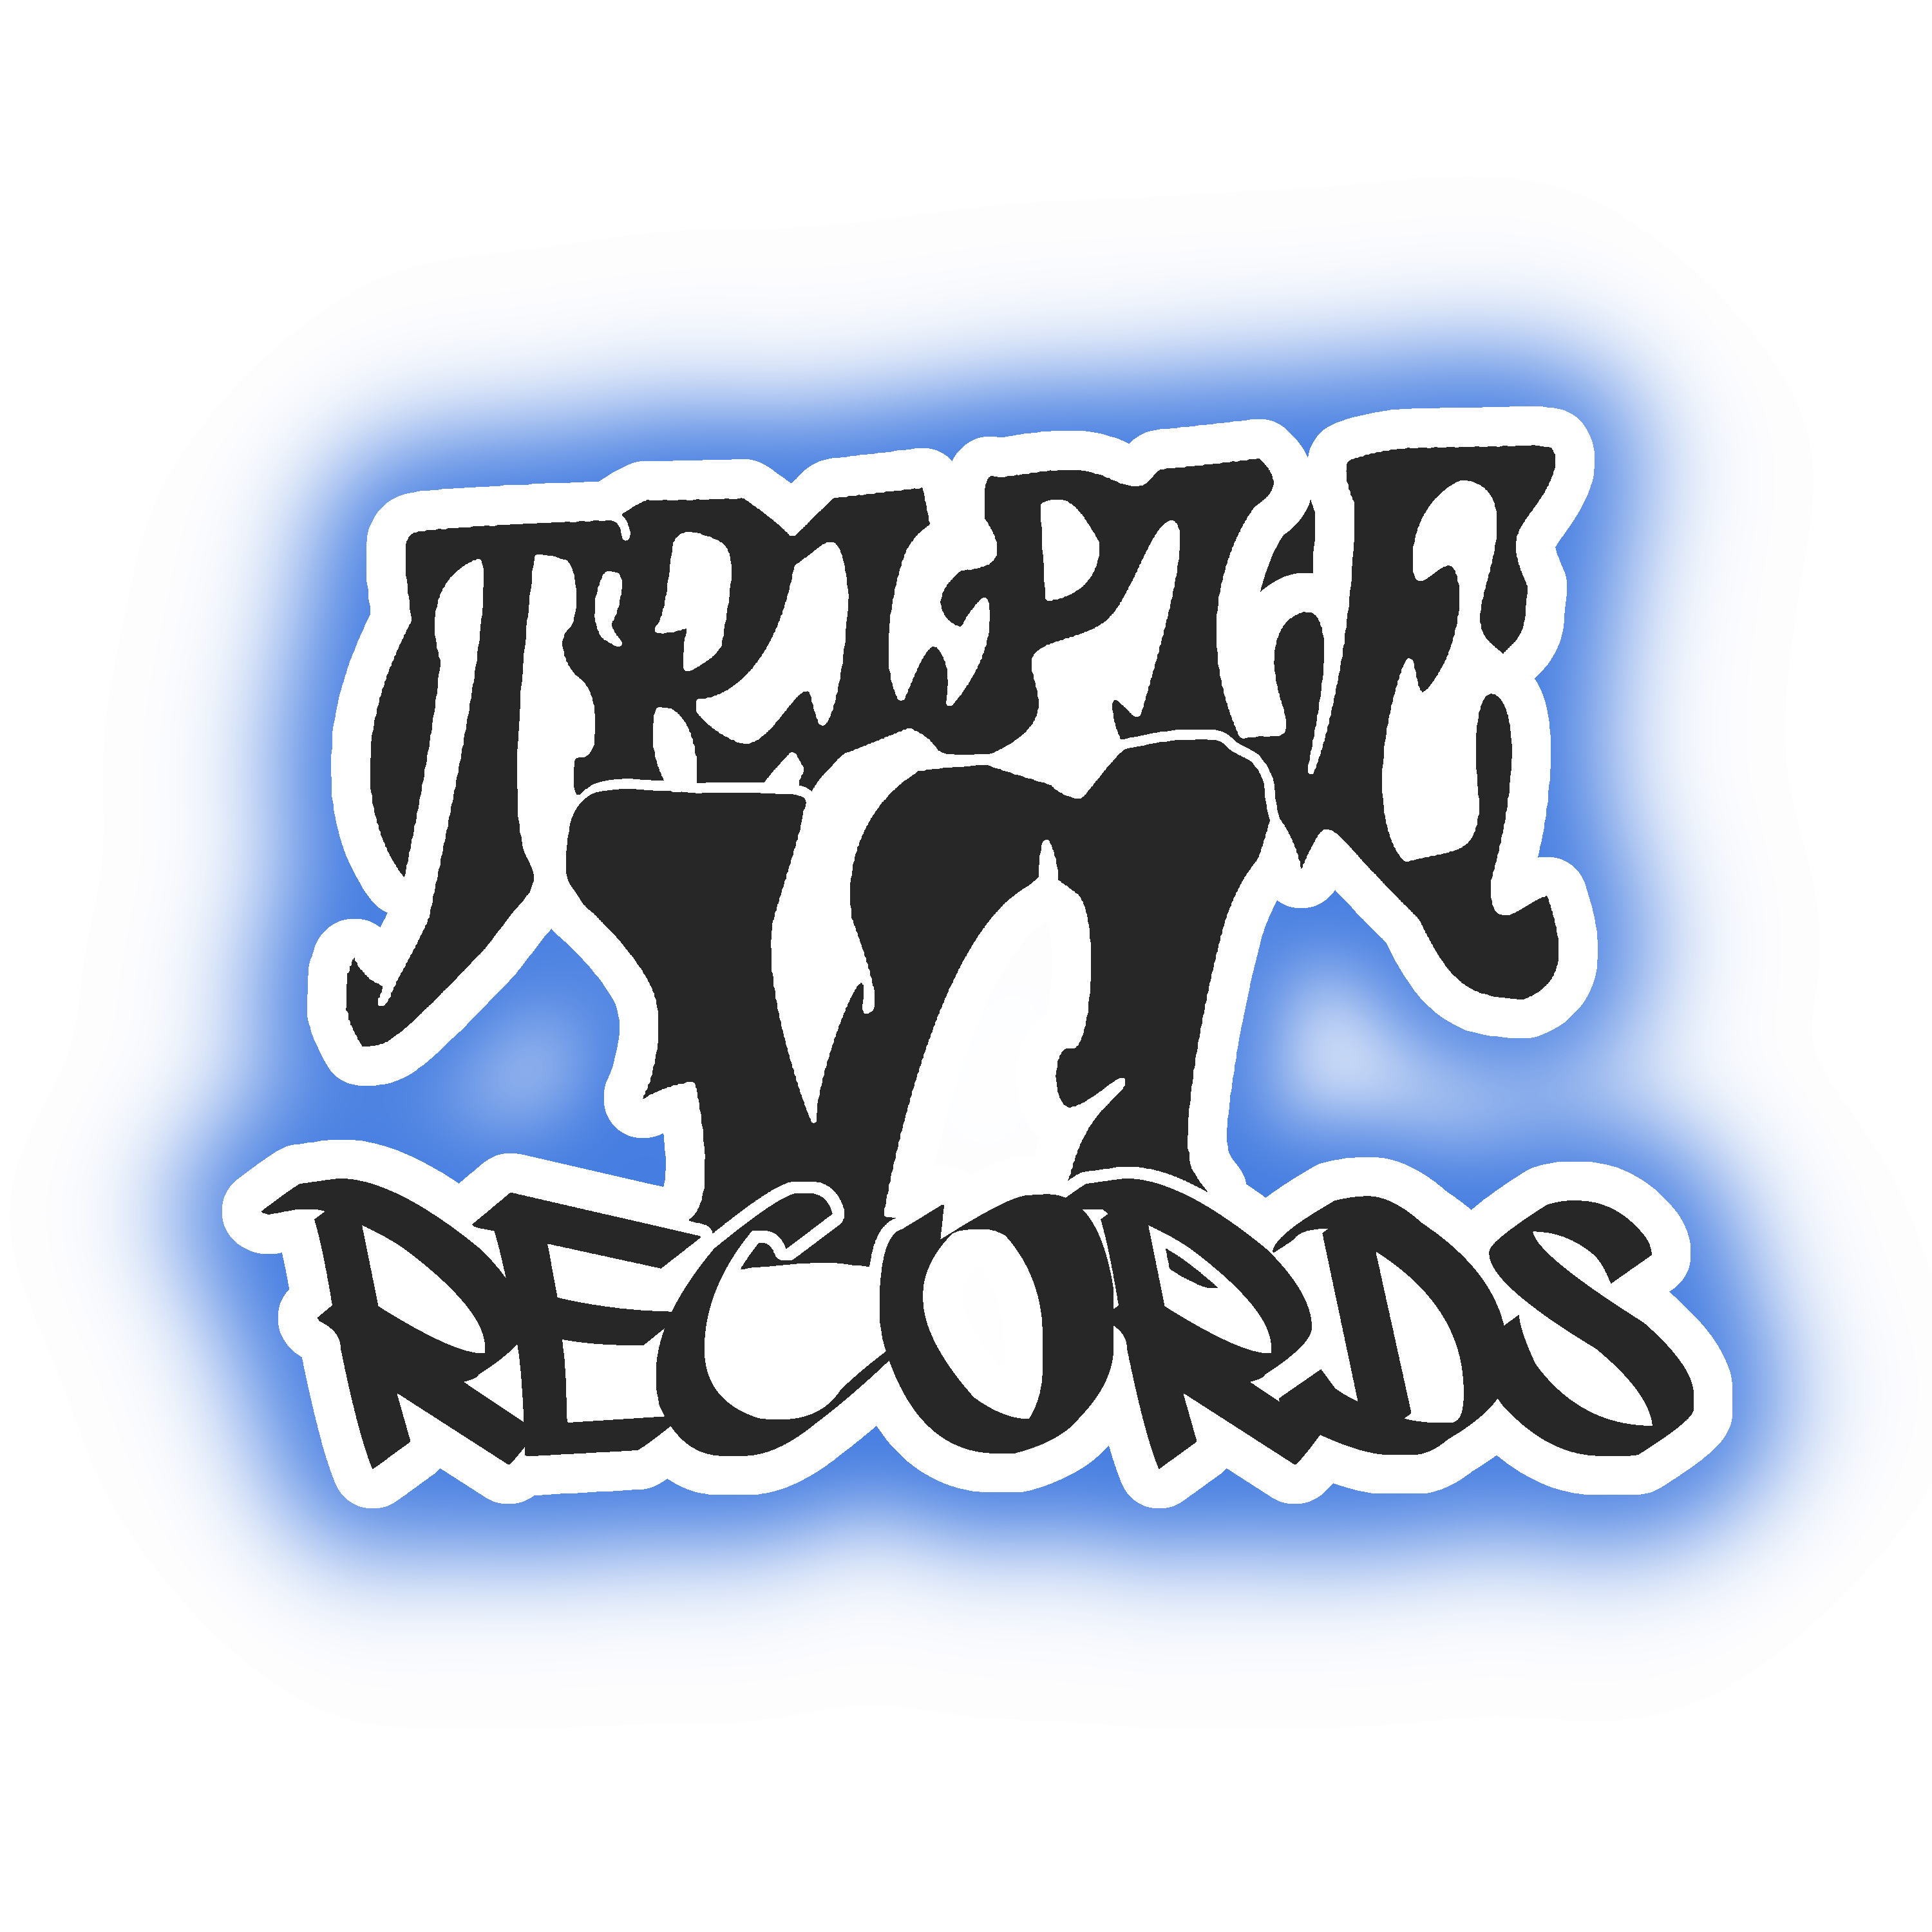 Triple Six Records